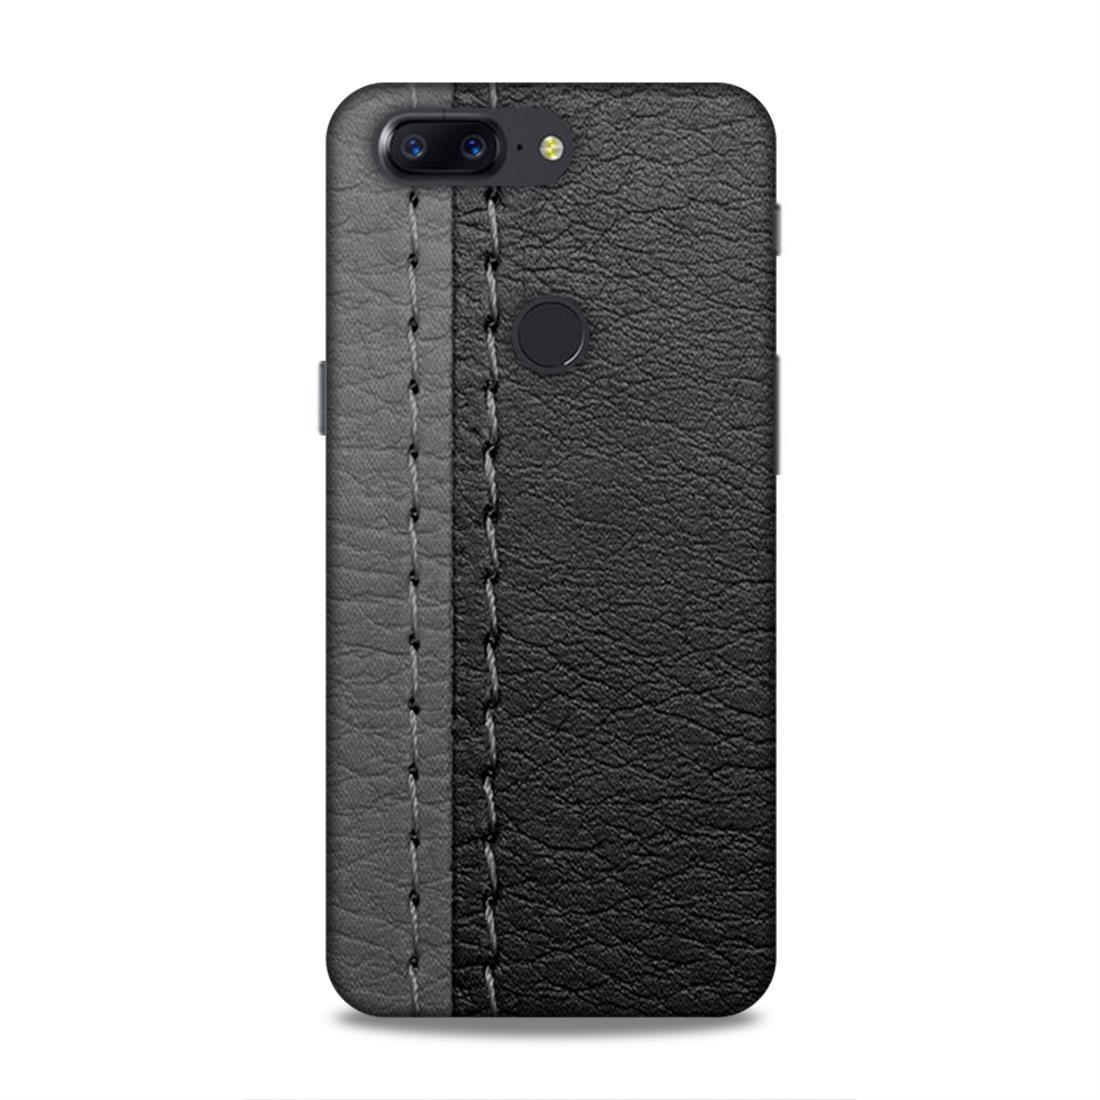 Light Dark Grey OnePlus 5T Mobile Back Cover